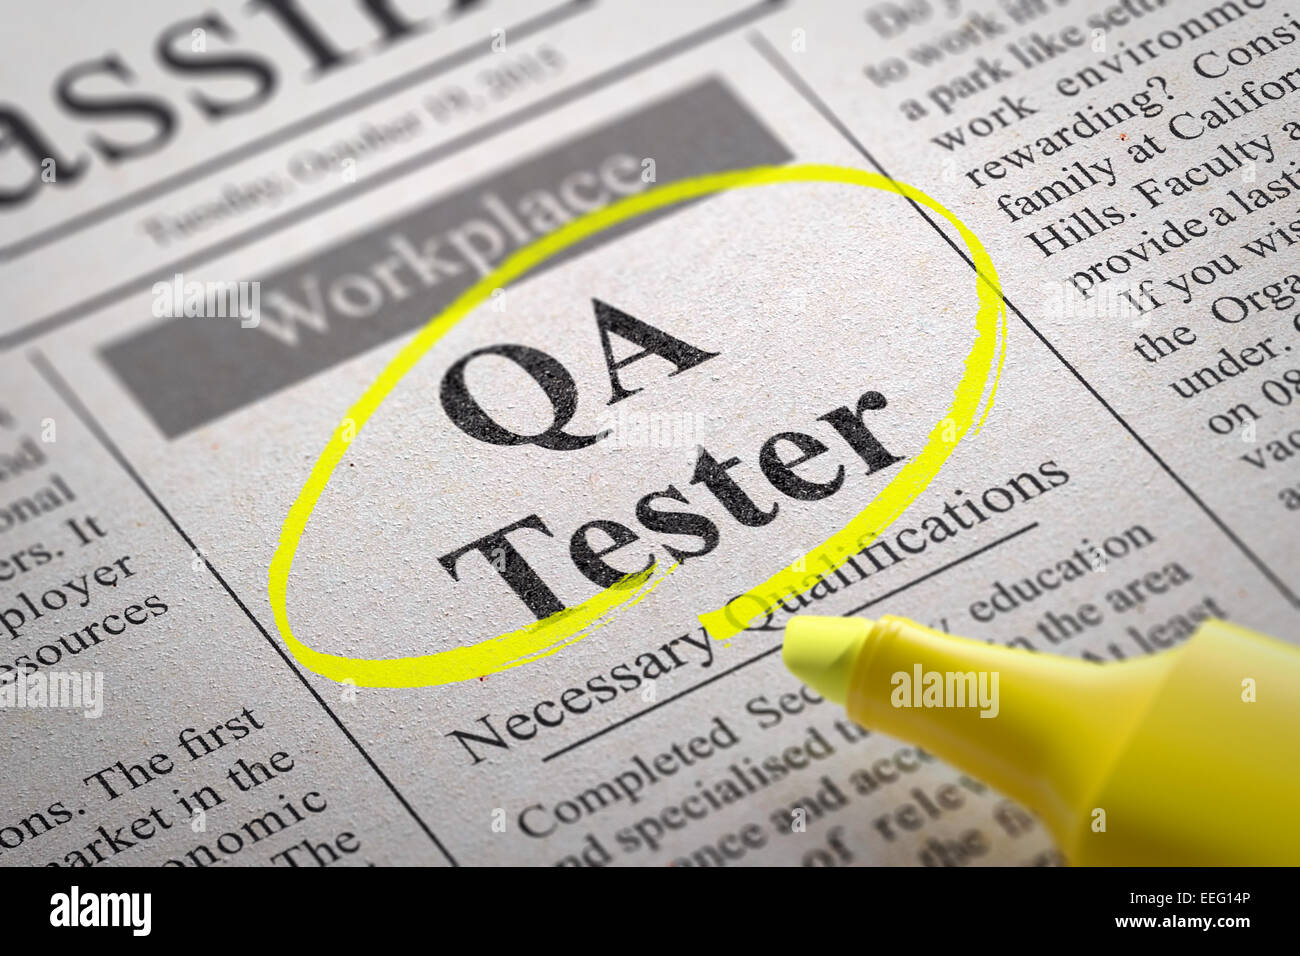 QA Tester Jobs in Zeitung. Stockfoto